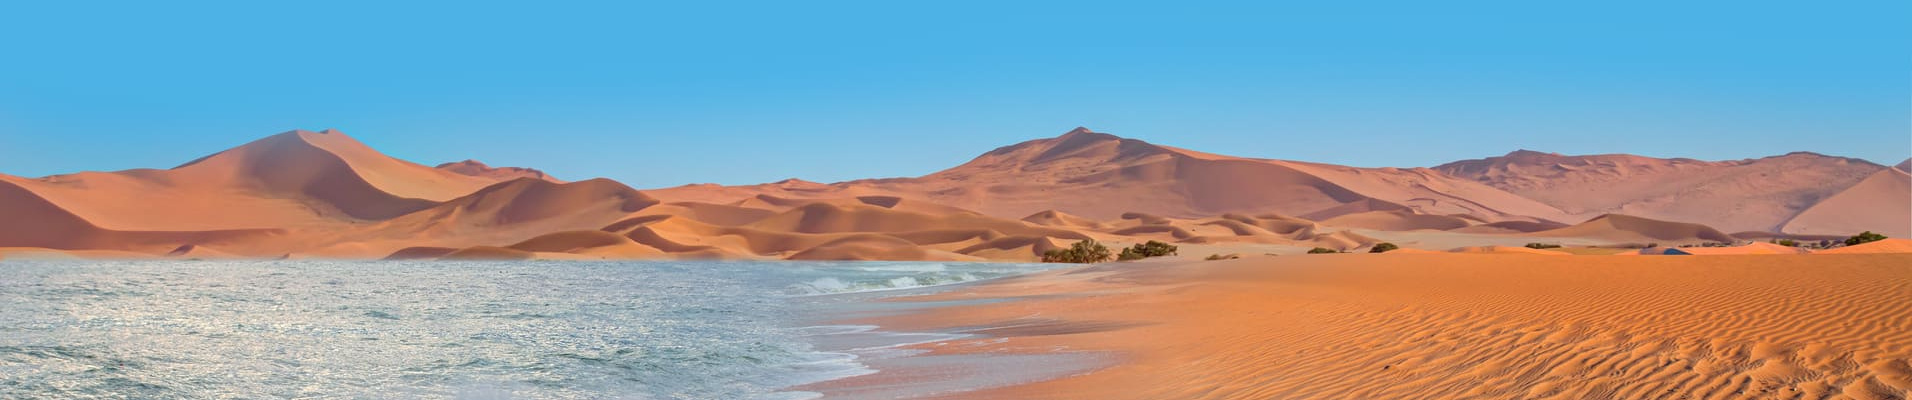 desert-namib-ocean-atlantique-namibie